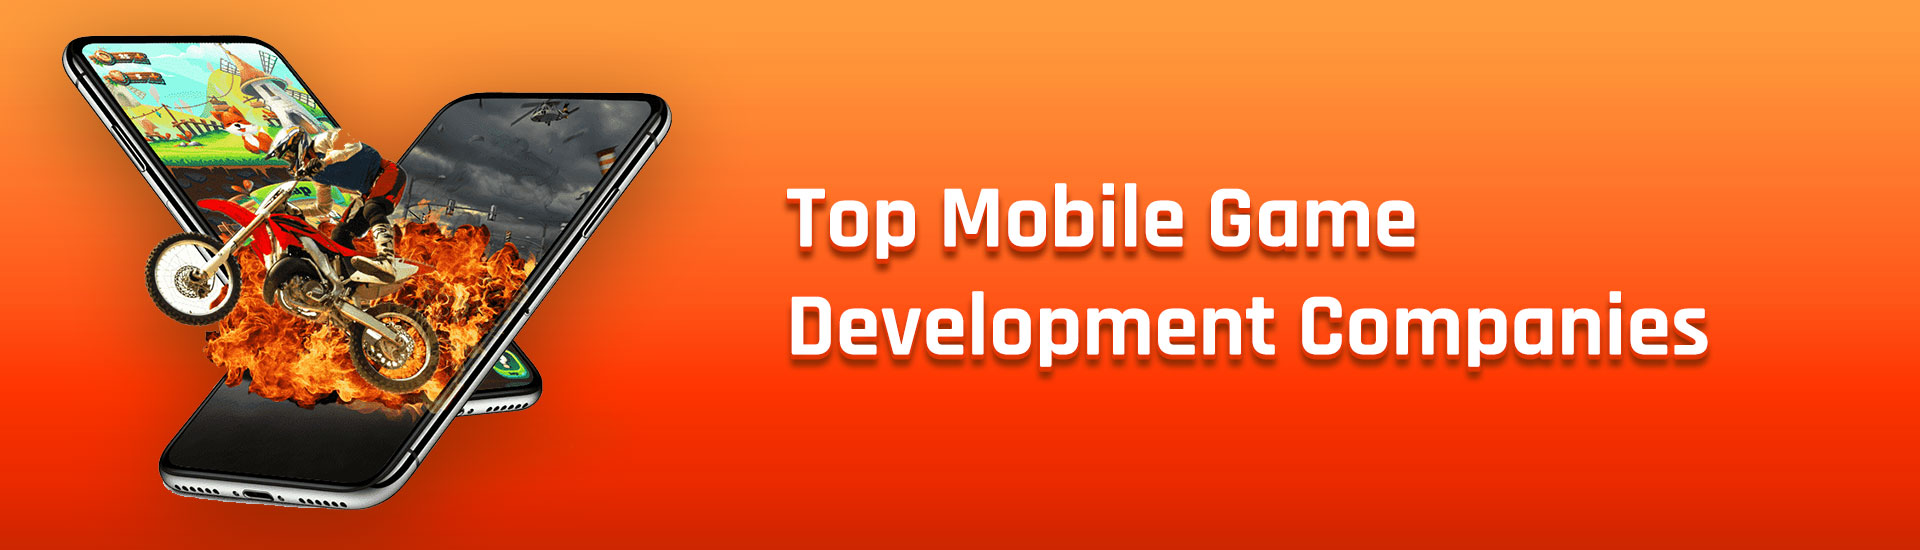 Mobile Game Development Agency